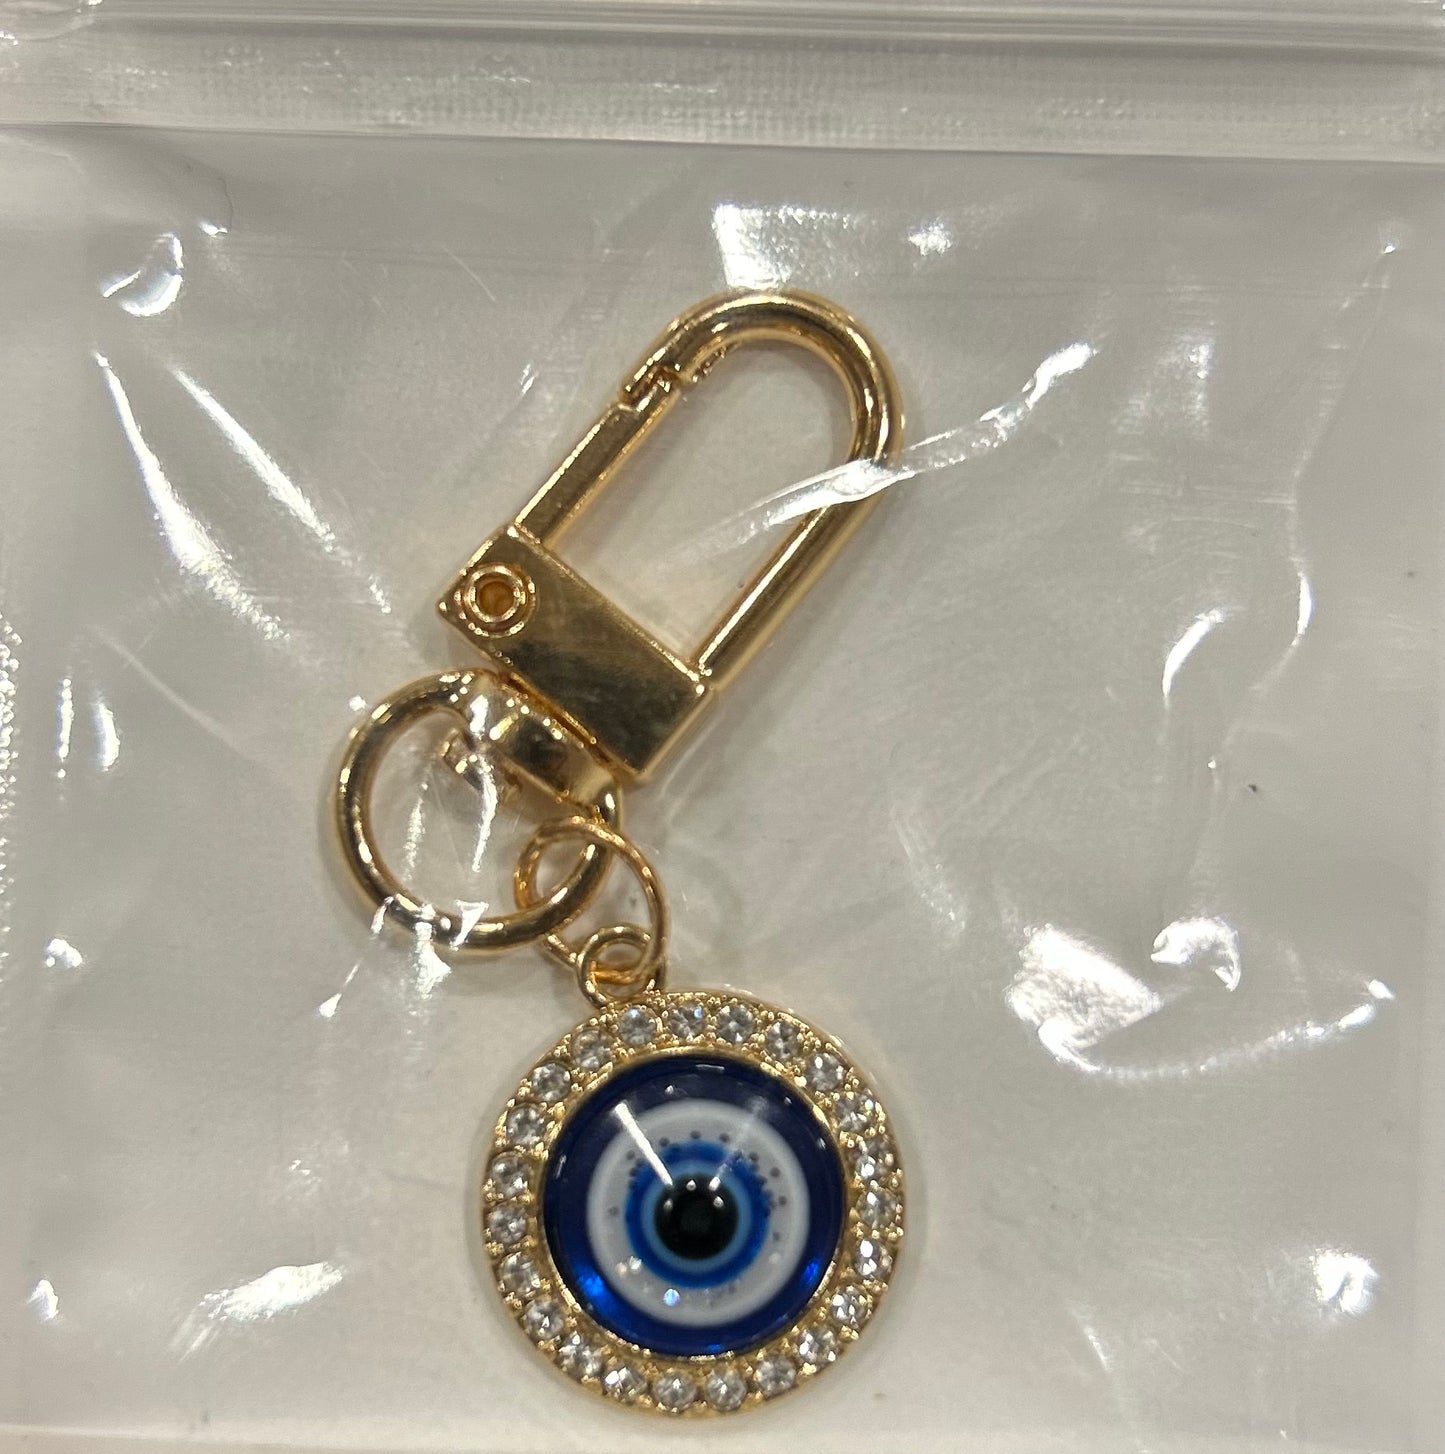 Circular Evil Eye Key Chain